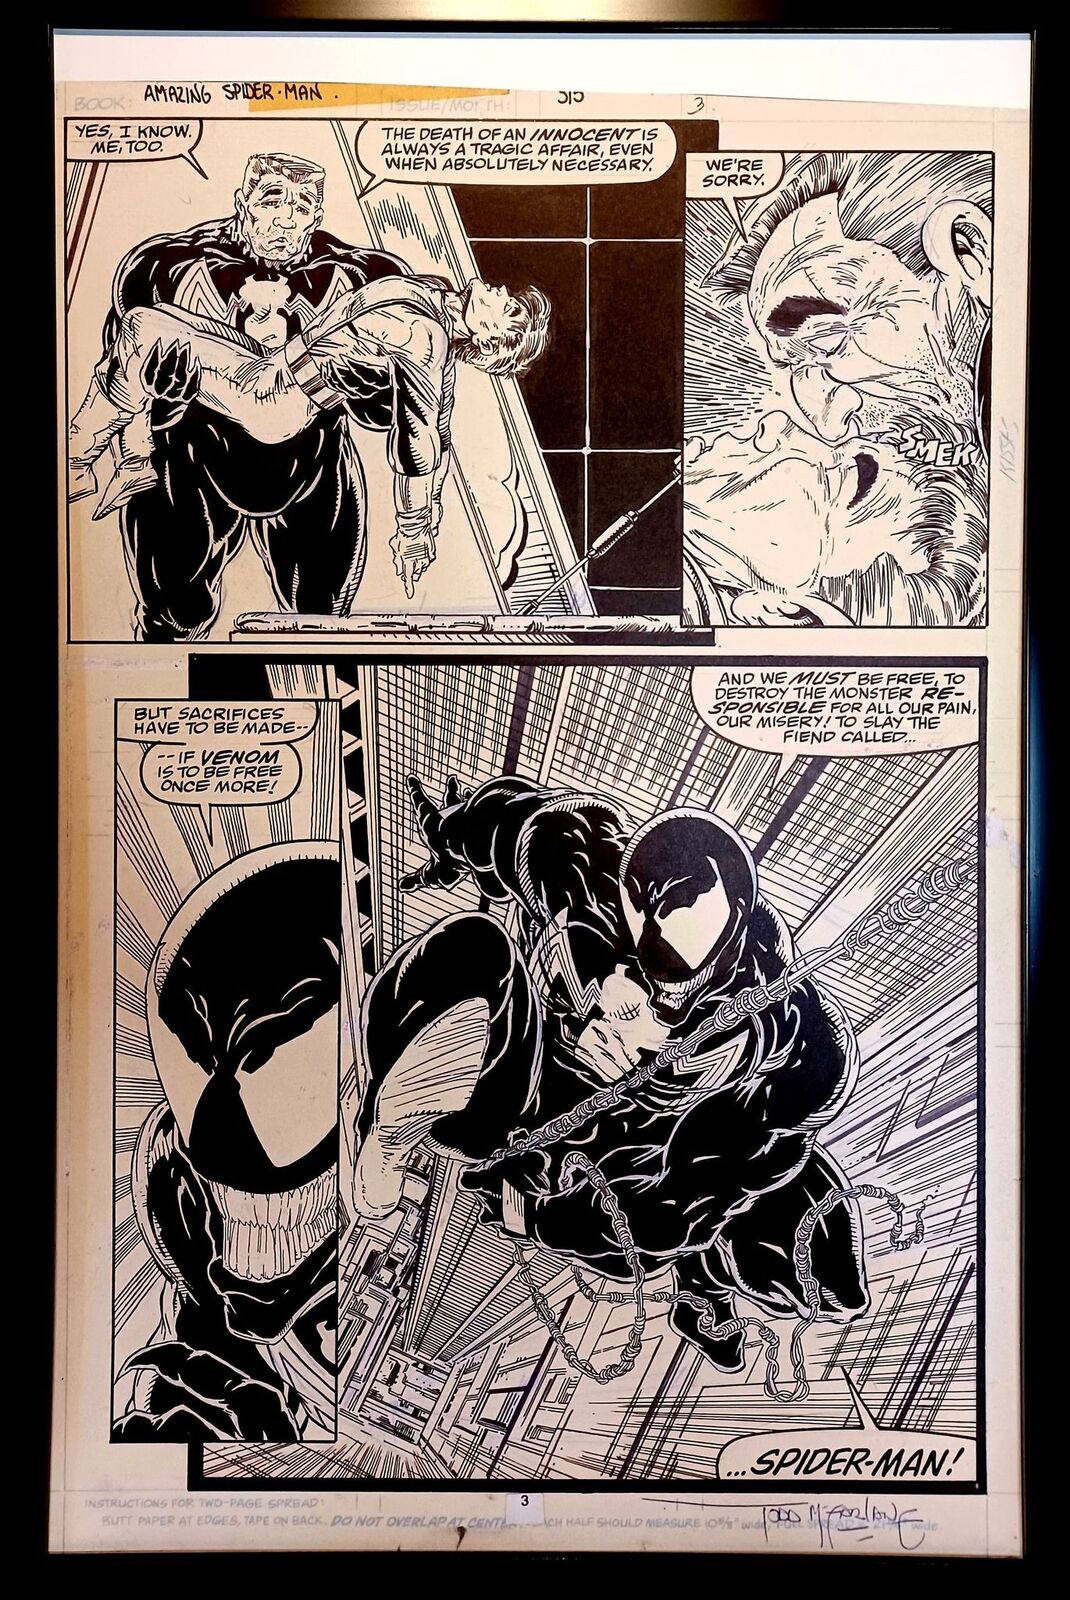 Amazing Spider-Man #315 pg. 3 by Todd McFarlane 11x17 FRAMED Original Art Print 